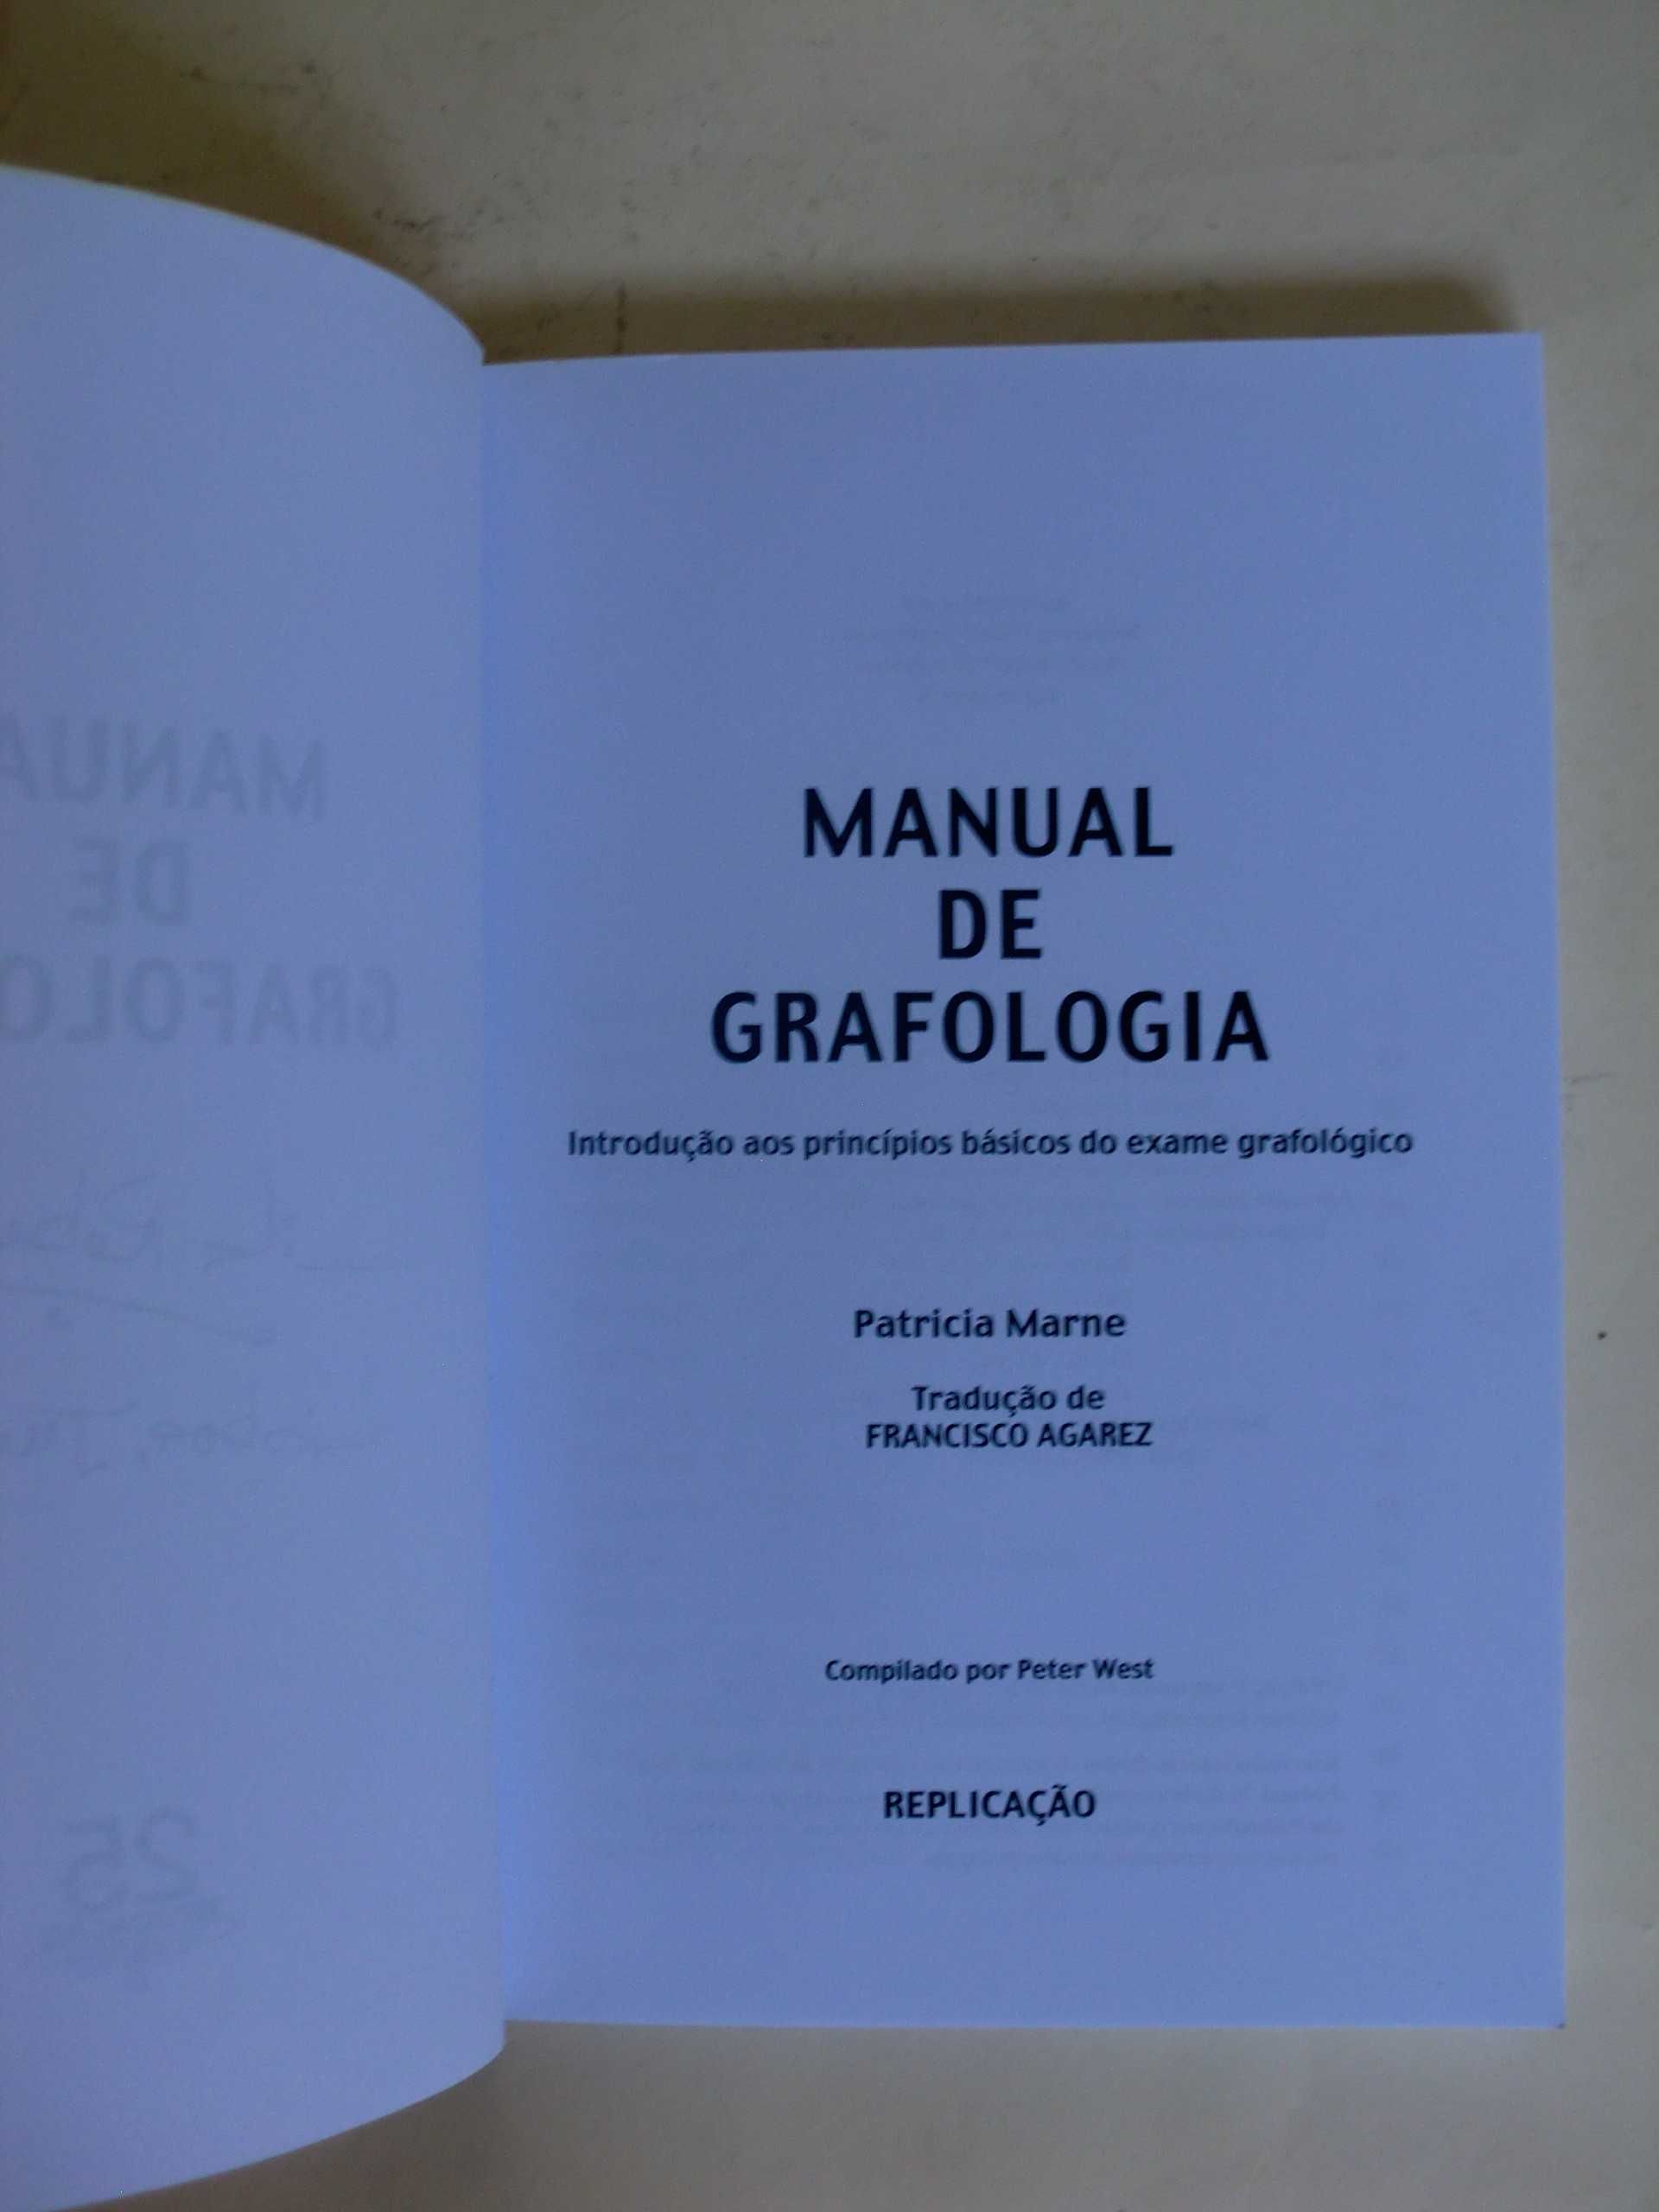 Manual de Grafologia
de Patricia Marne